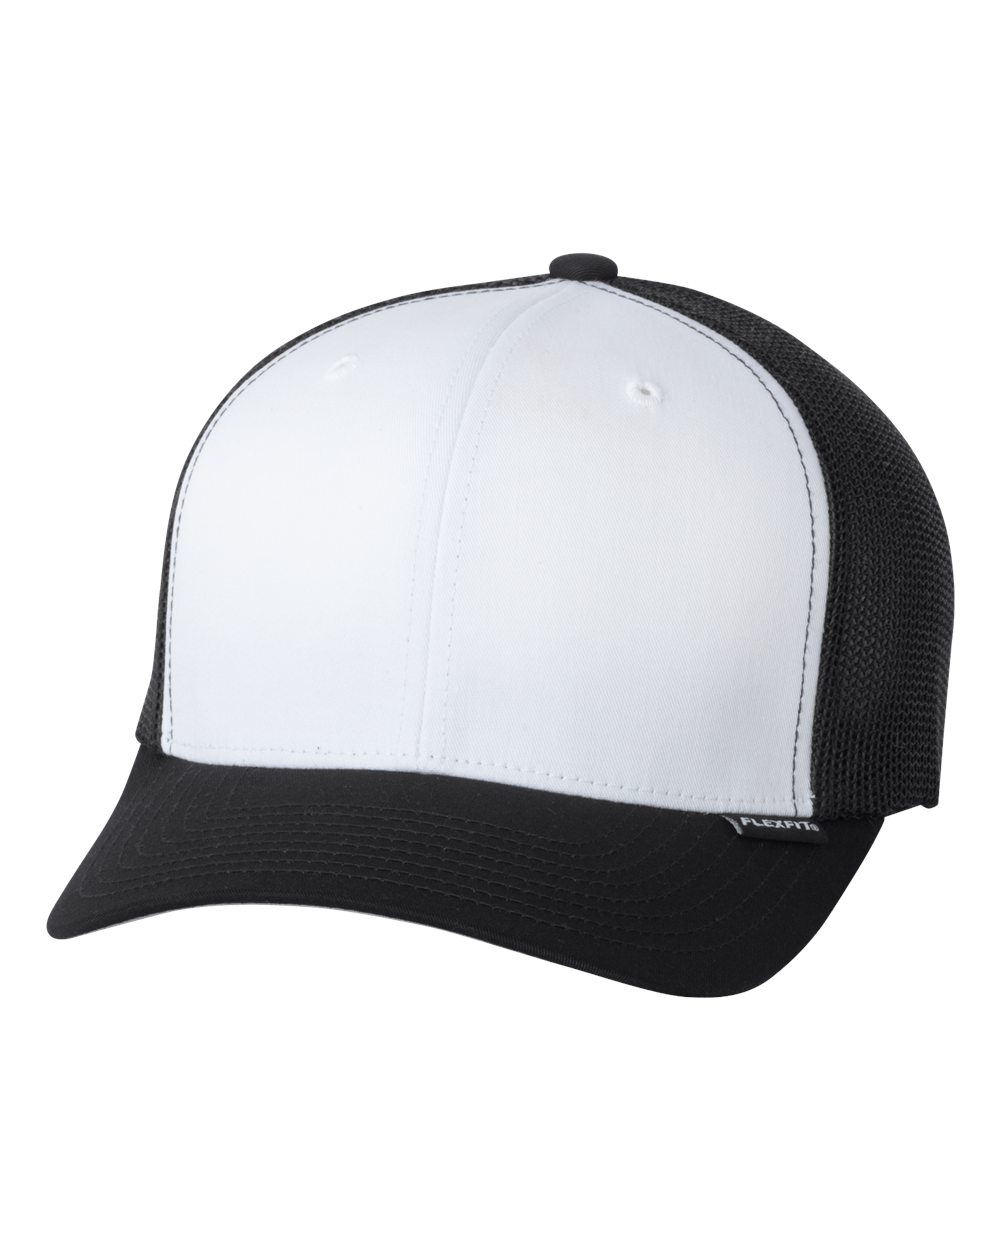 Trucker Cap. 6511 Black/ White/ Black One Size - Caps Black And White, Transparent background PNG HD thumbnail